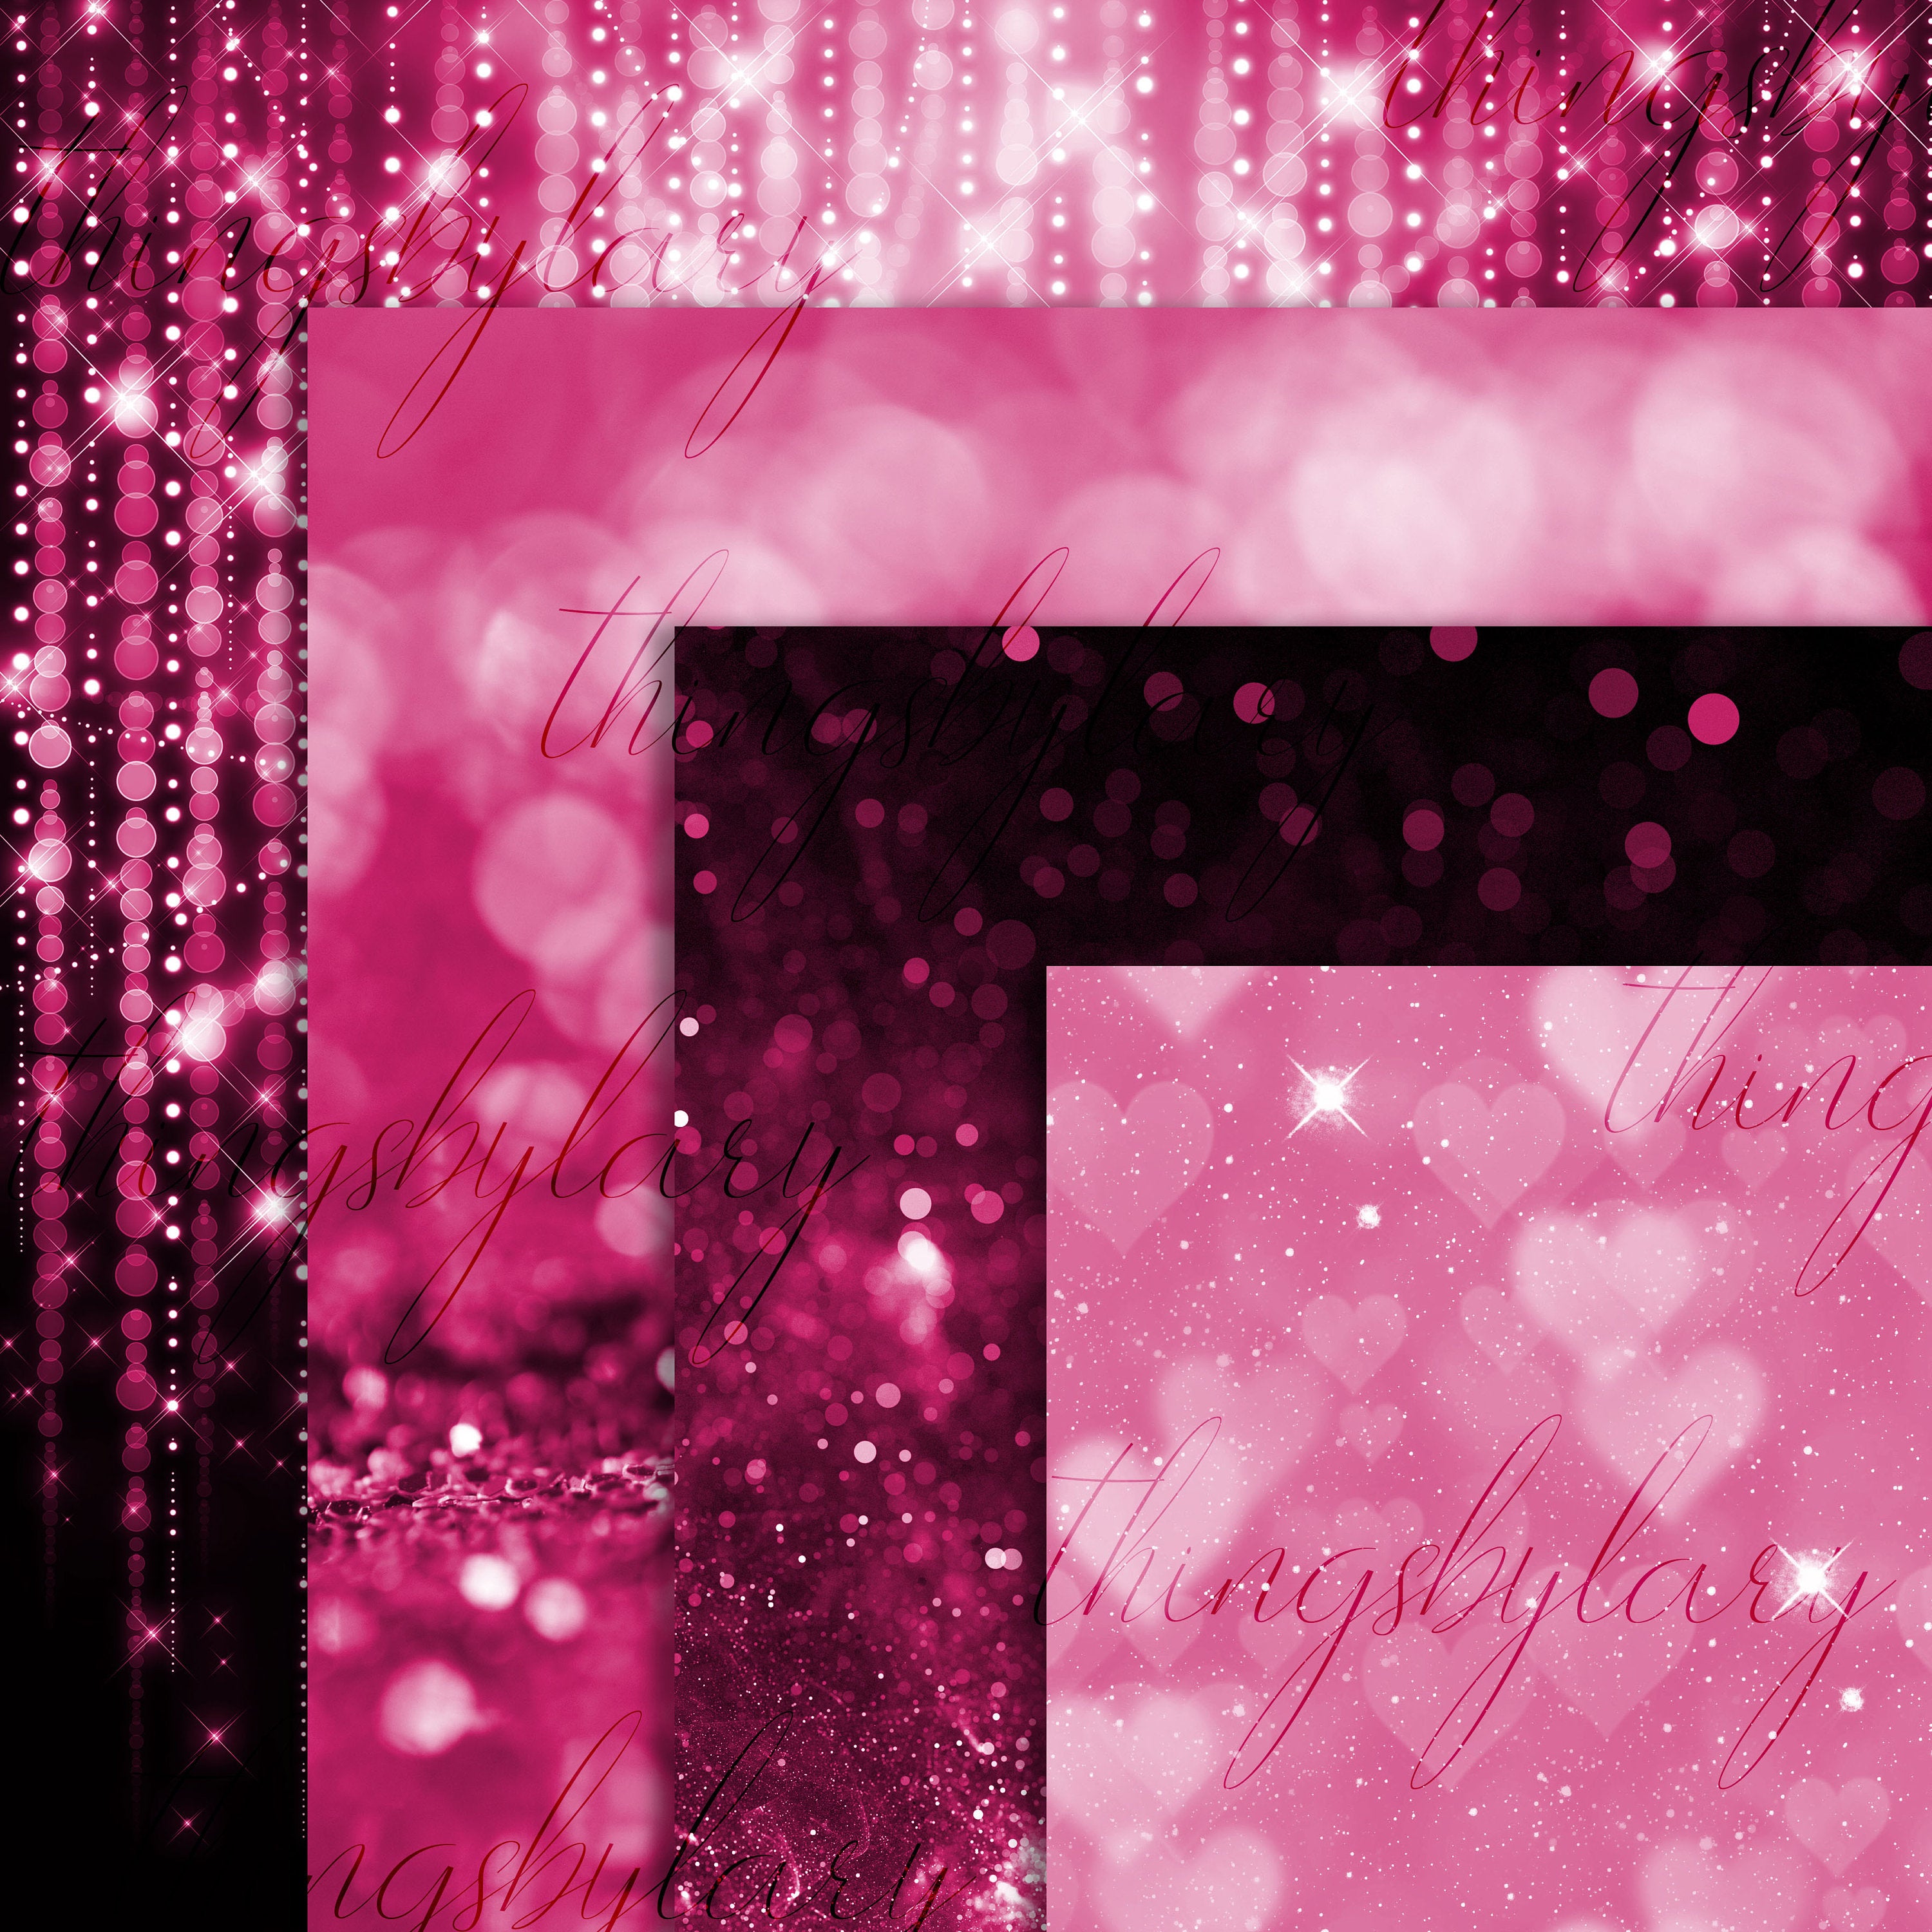 42 Pink Bokeh Papers 12 inch, 300 Dpi Planner Paper, Commercial Use, Scrapbook Paper, Pink Glitter Bokeh , Valentine Bokeh, Christmas Bokeh